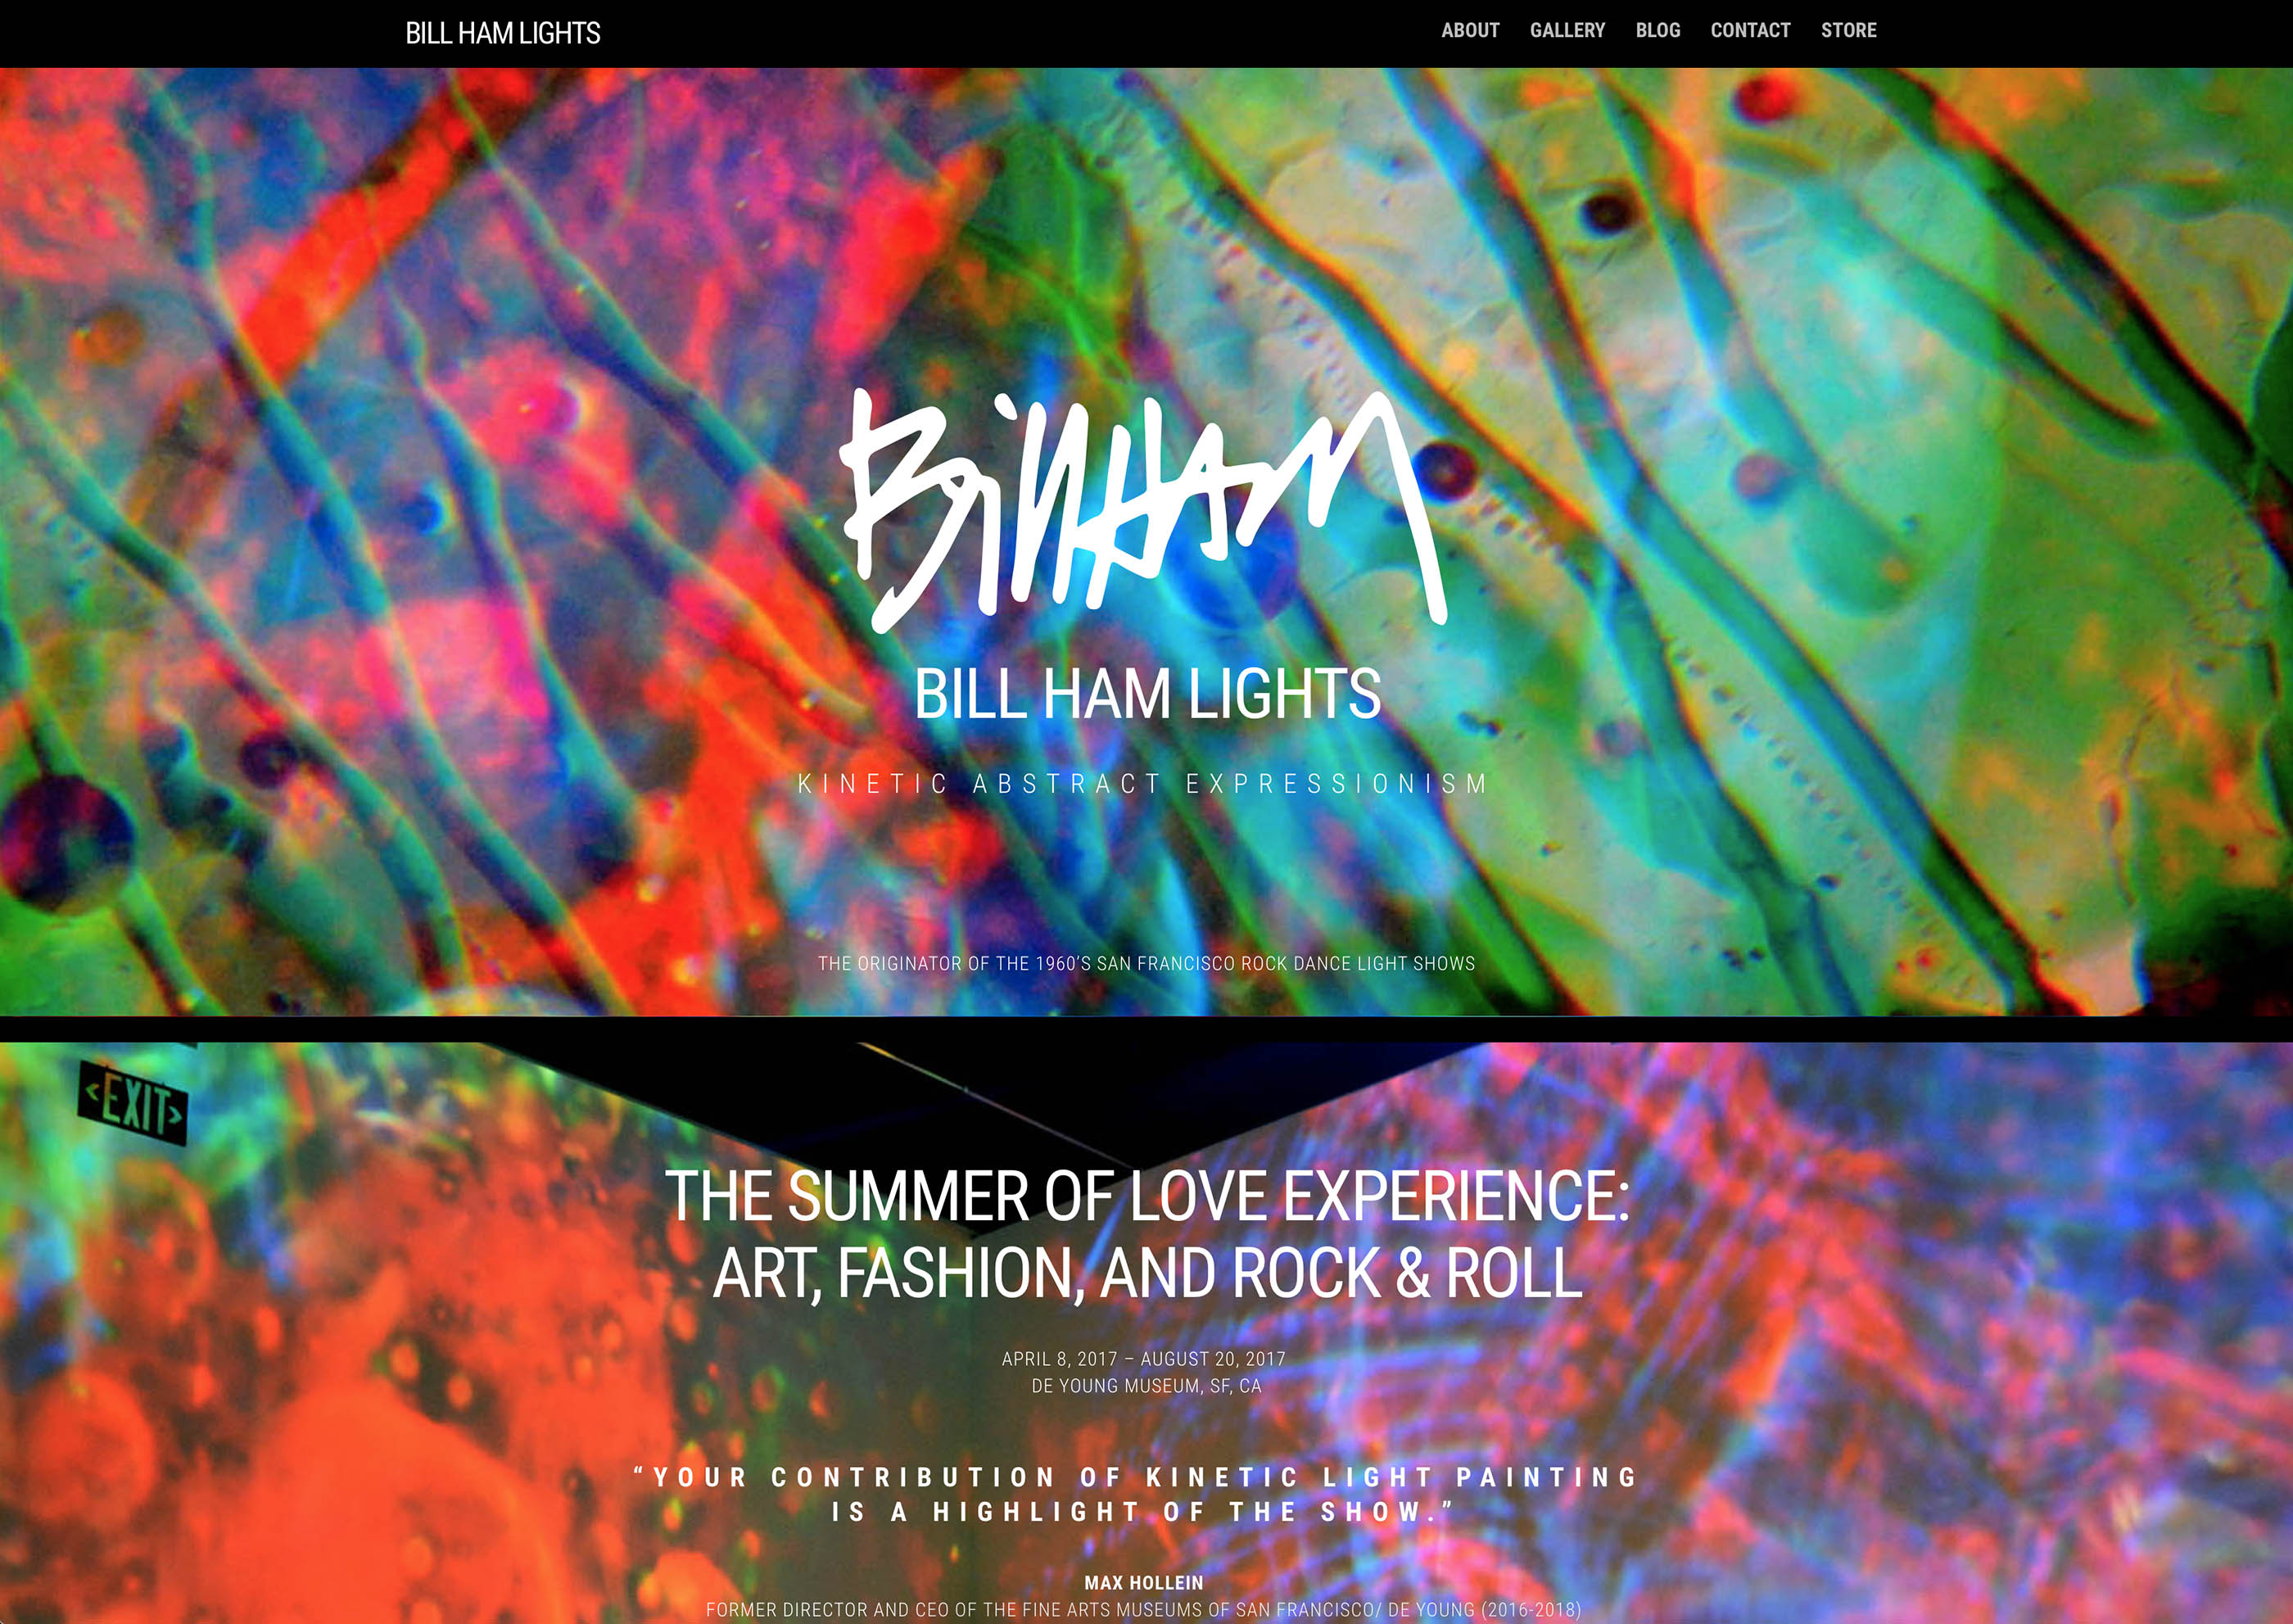 Bill Ham Lights website homepage screenshot